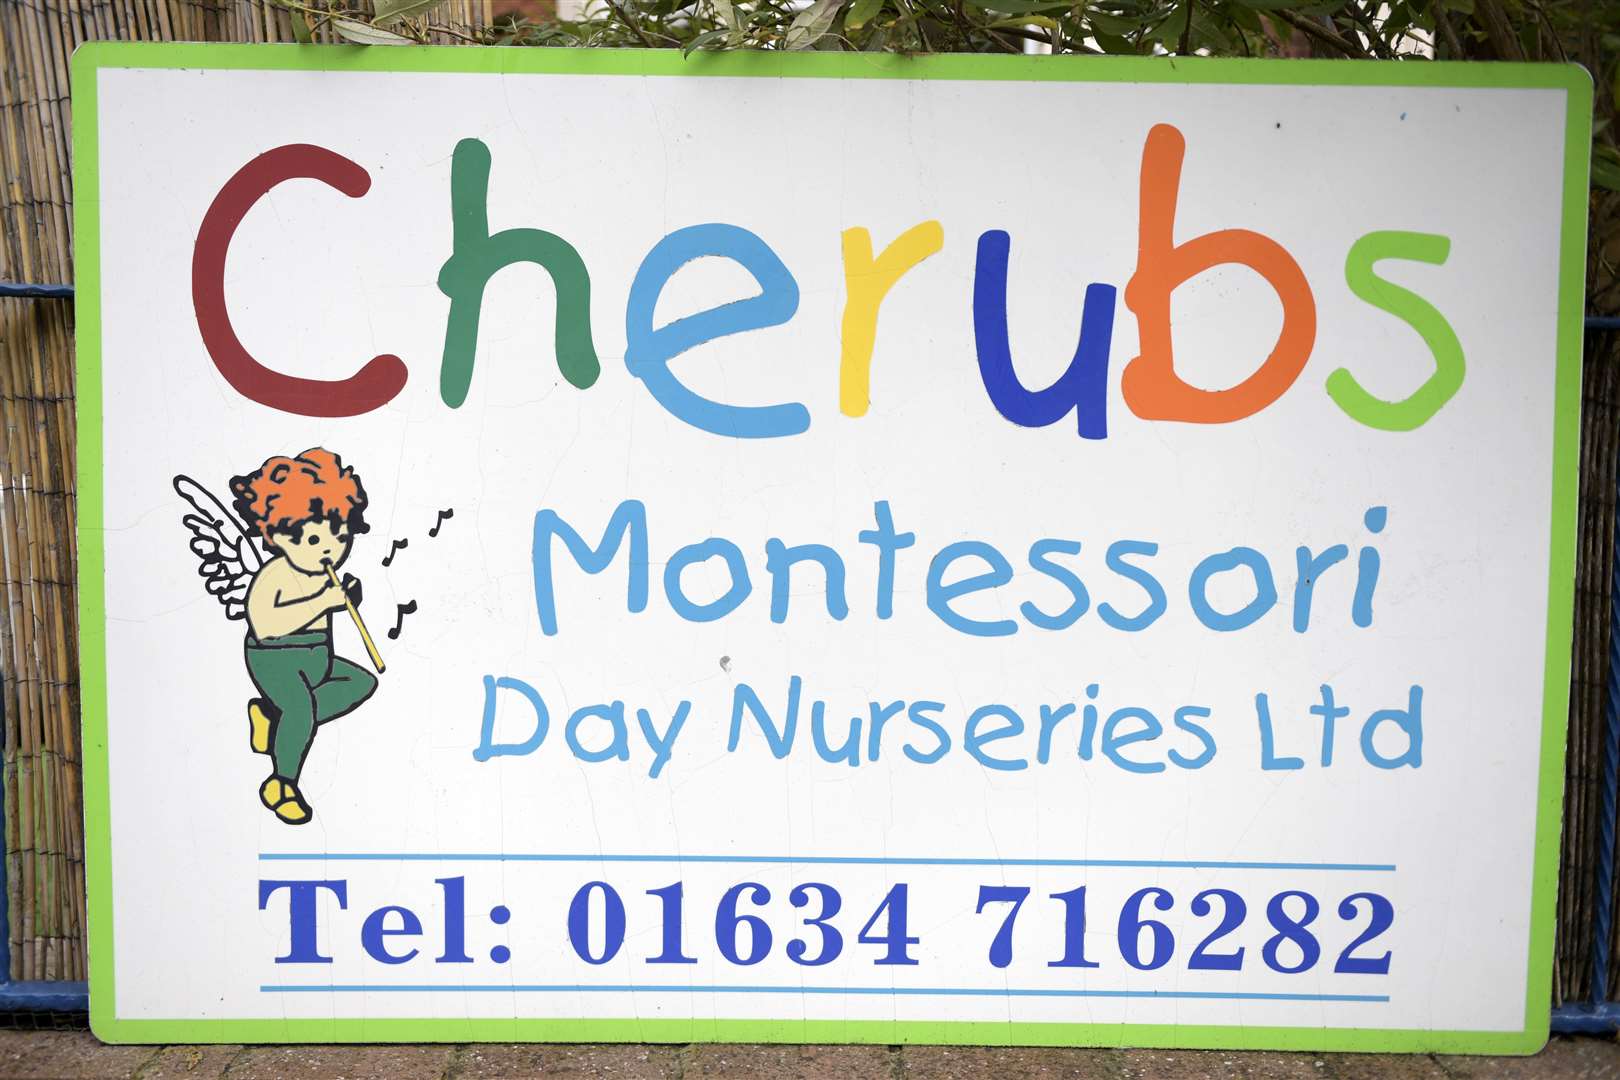 Cherubs Montessori Day Nursery is in Castleview Road, Strood